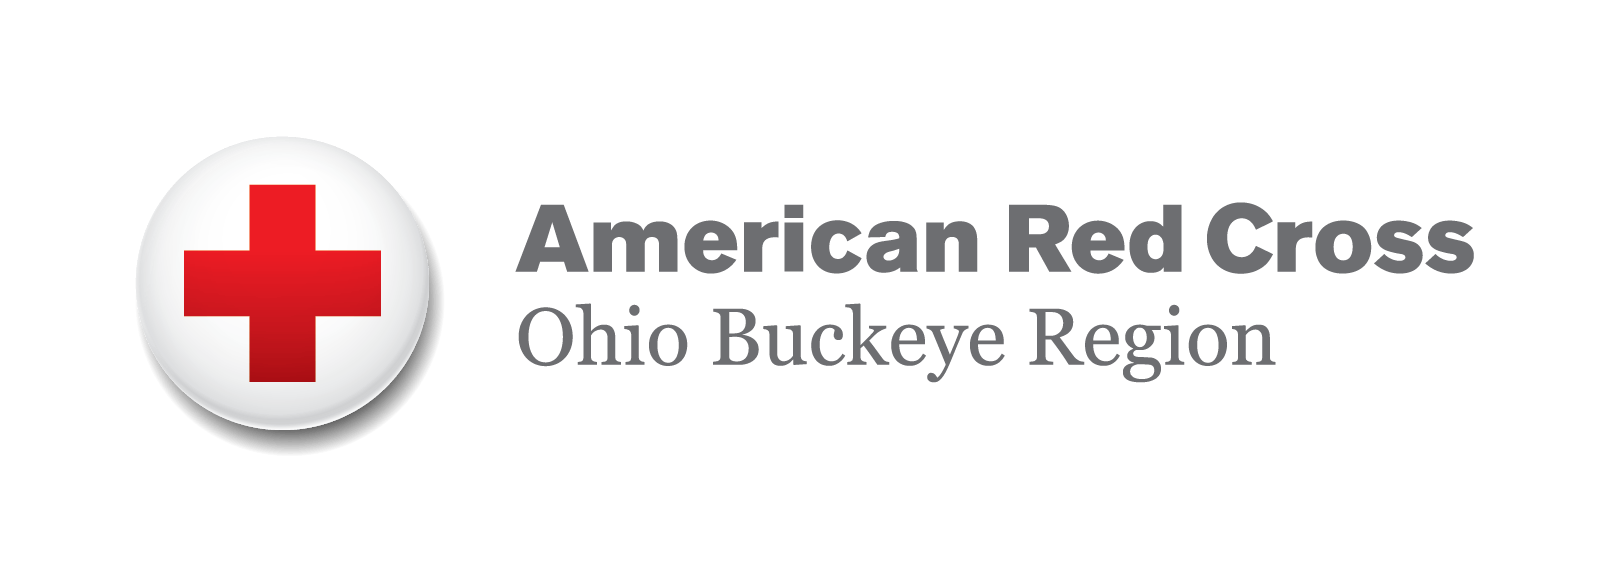 American Red Cross Colorado Logo - Ohio Buckeye Region – Sleeves Up. Hearts Open. All In.